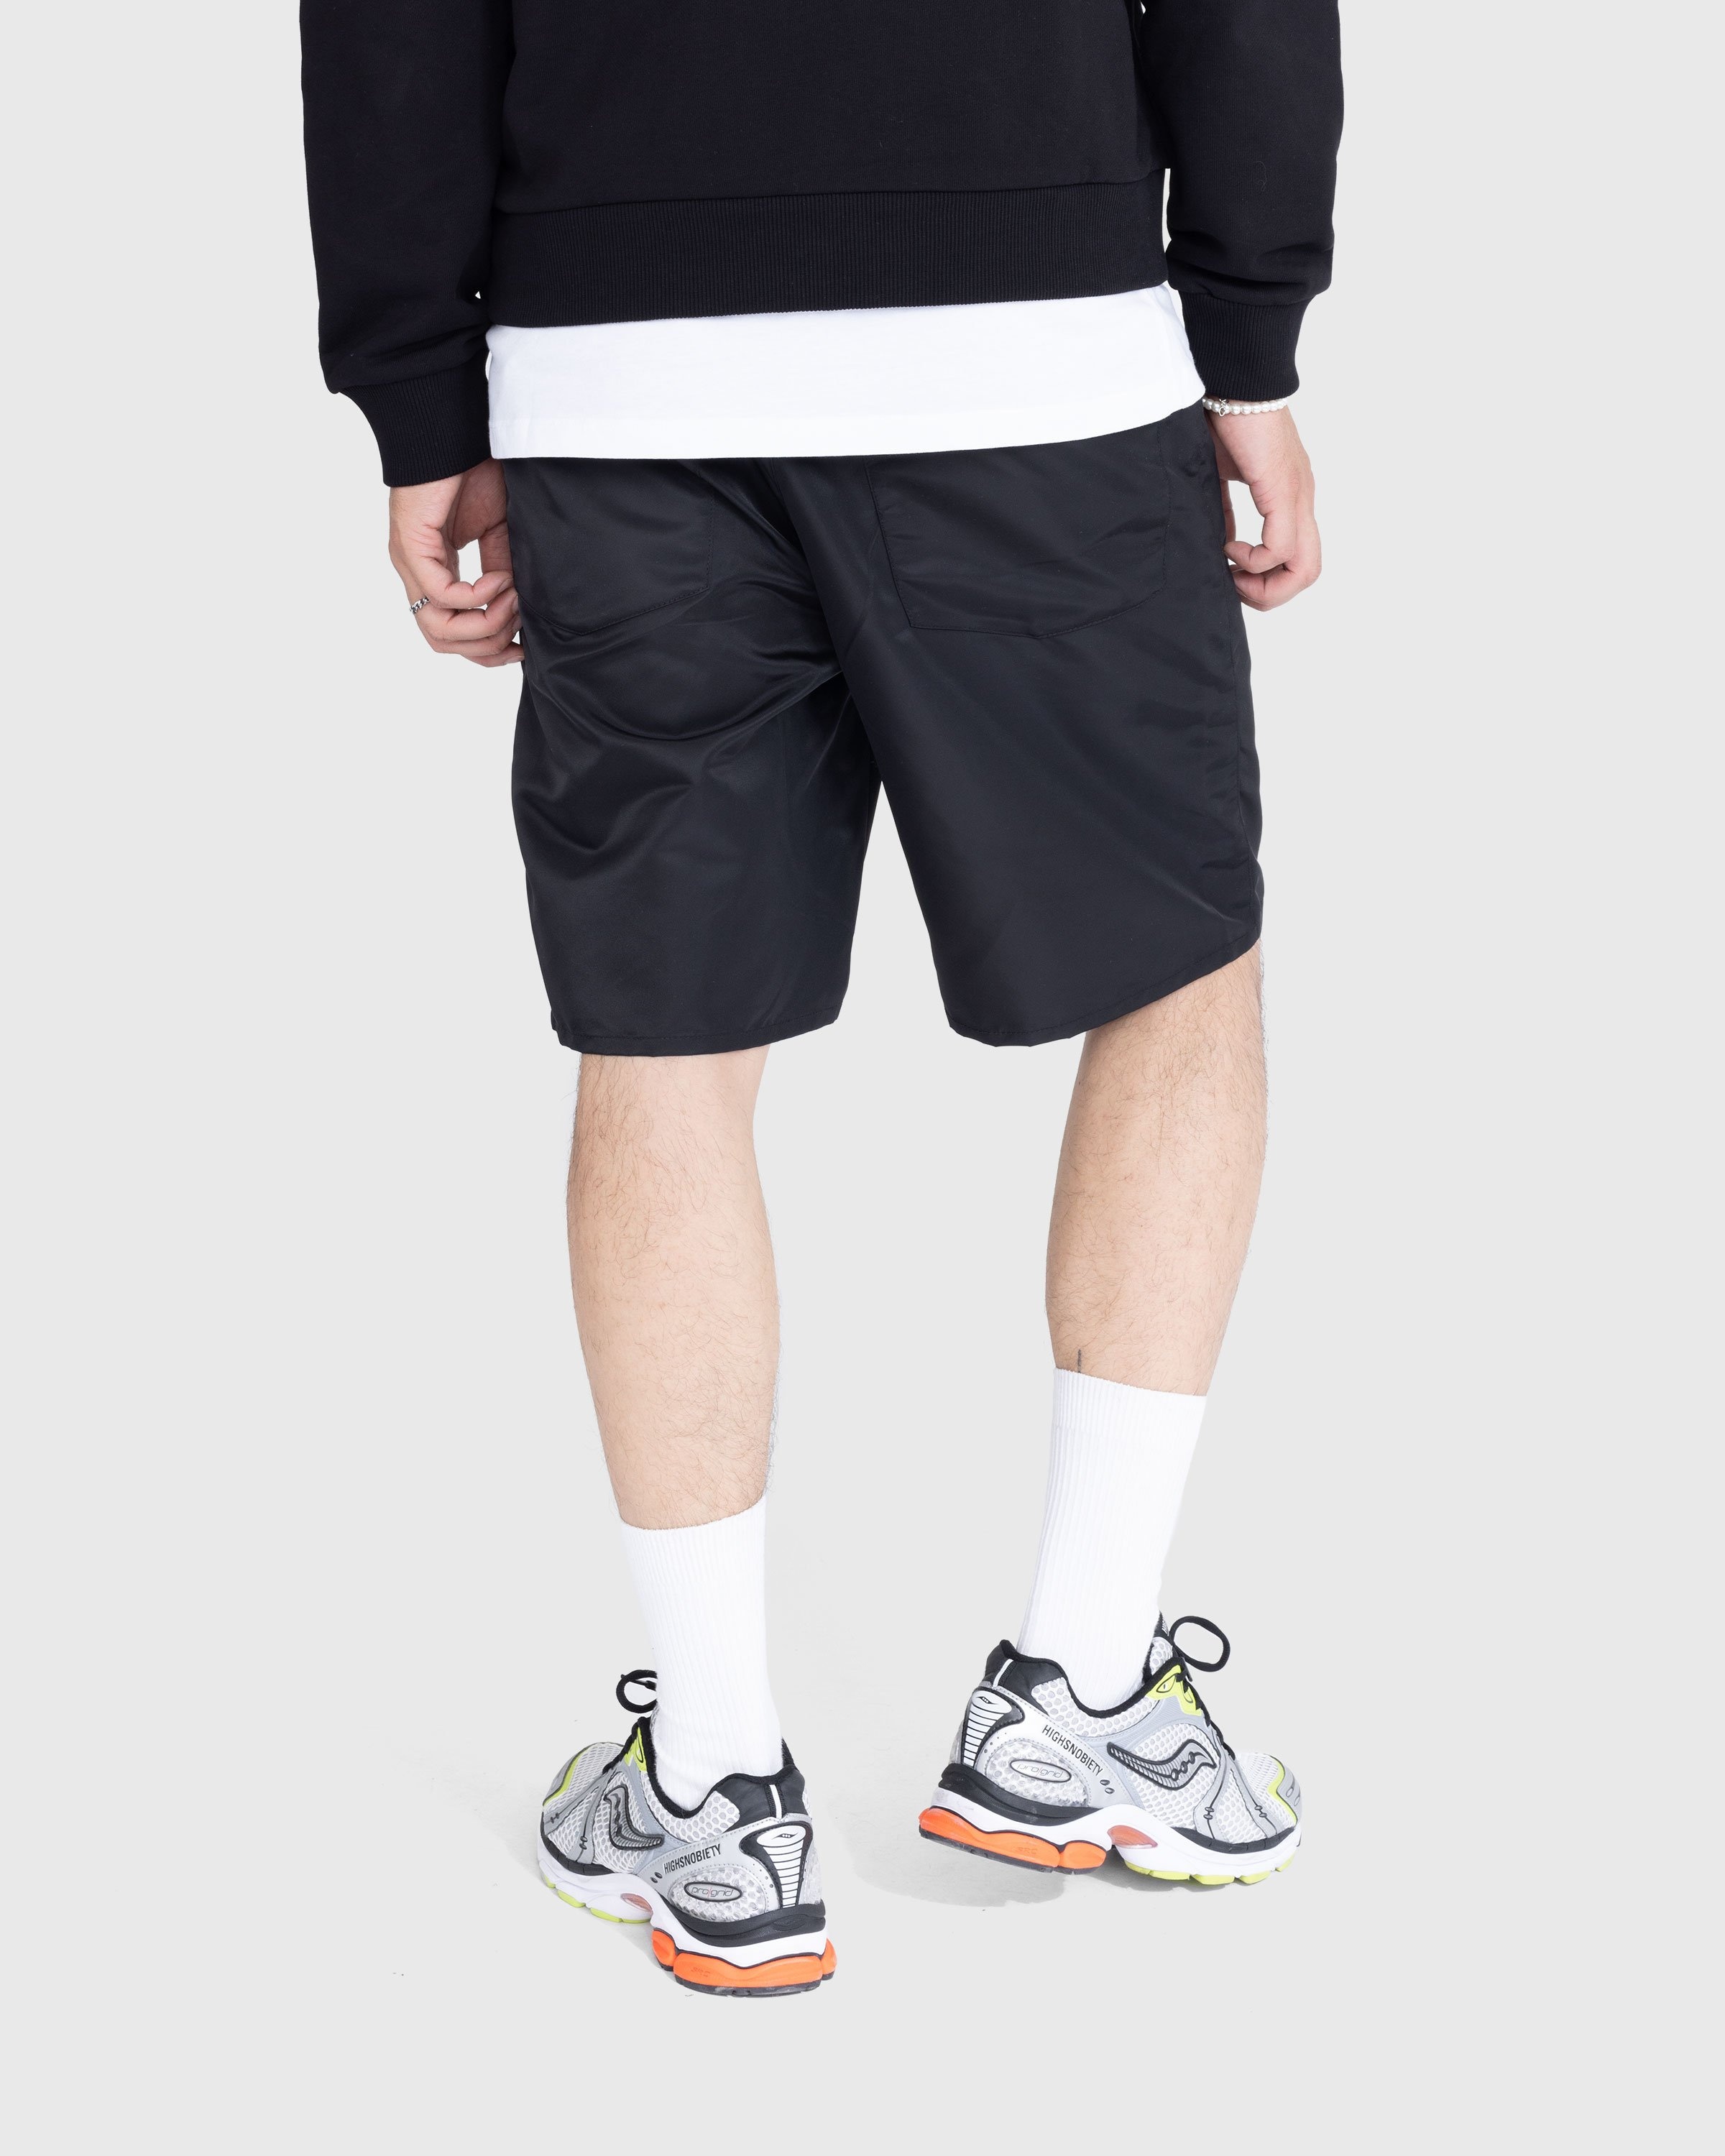 Trussardi – Nylon Shorts Black - Shorts - Black - Image 3